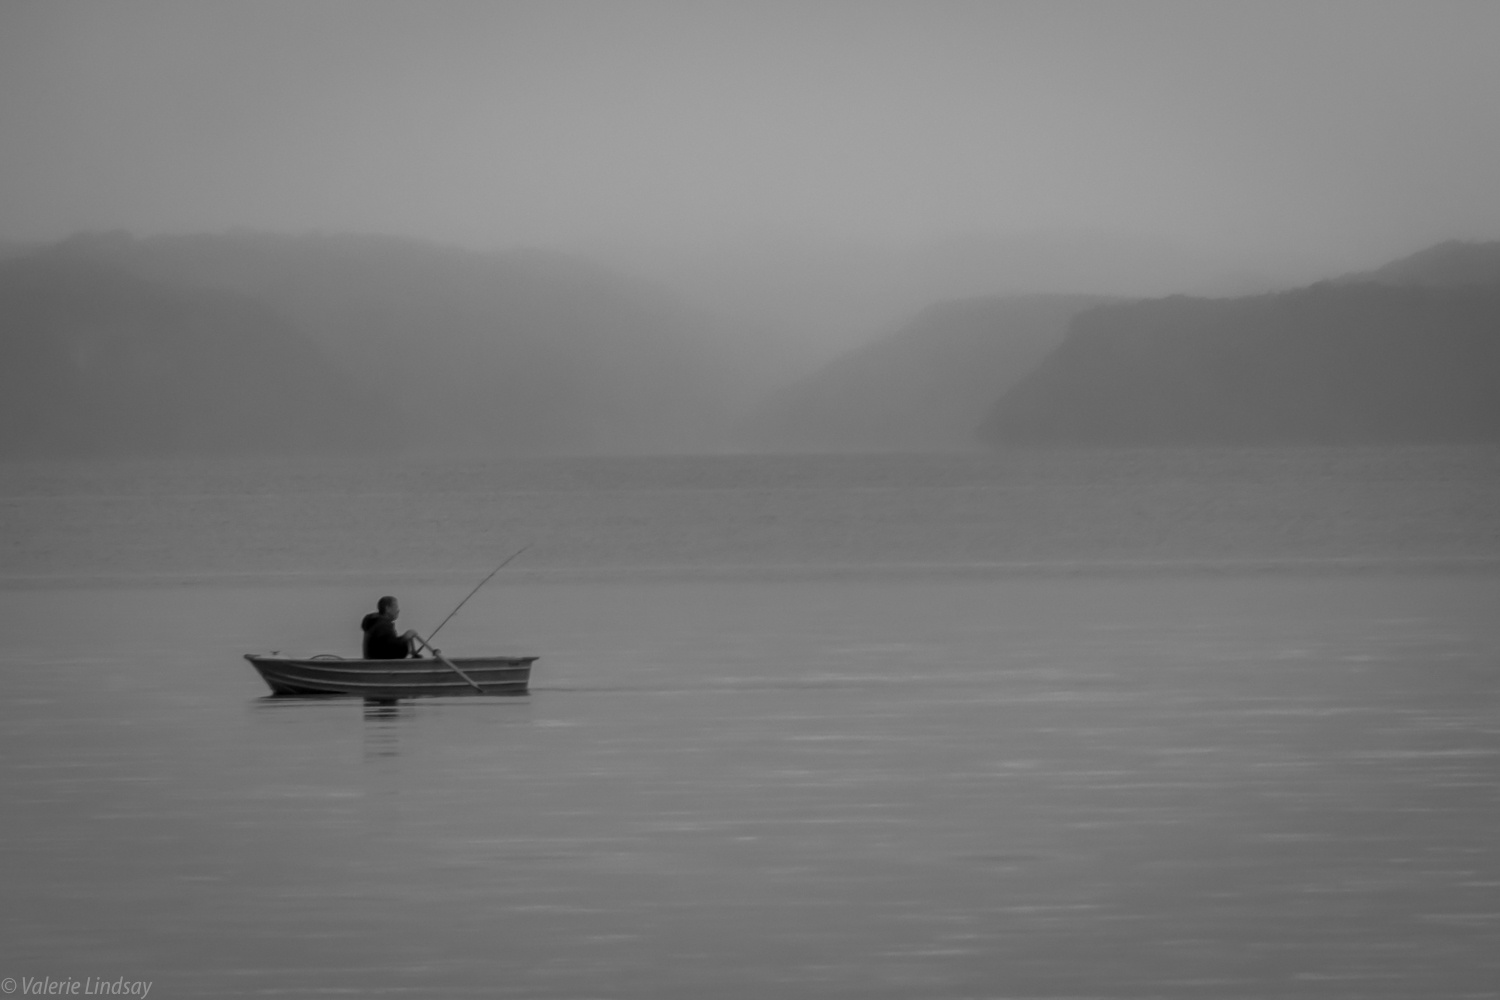 Man fishing on misty morning